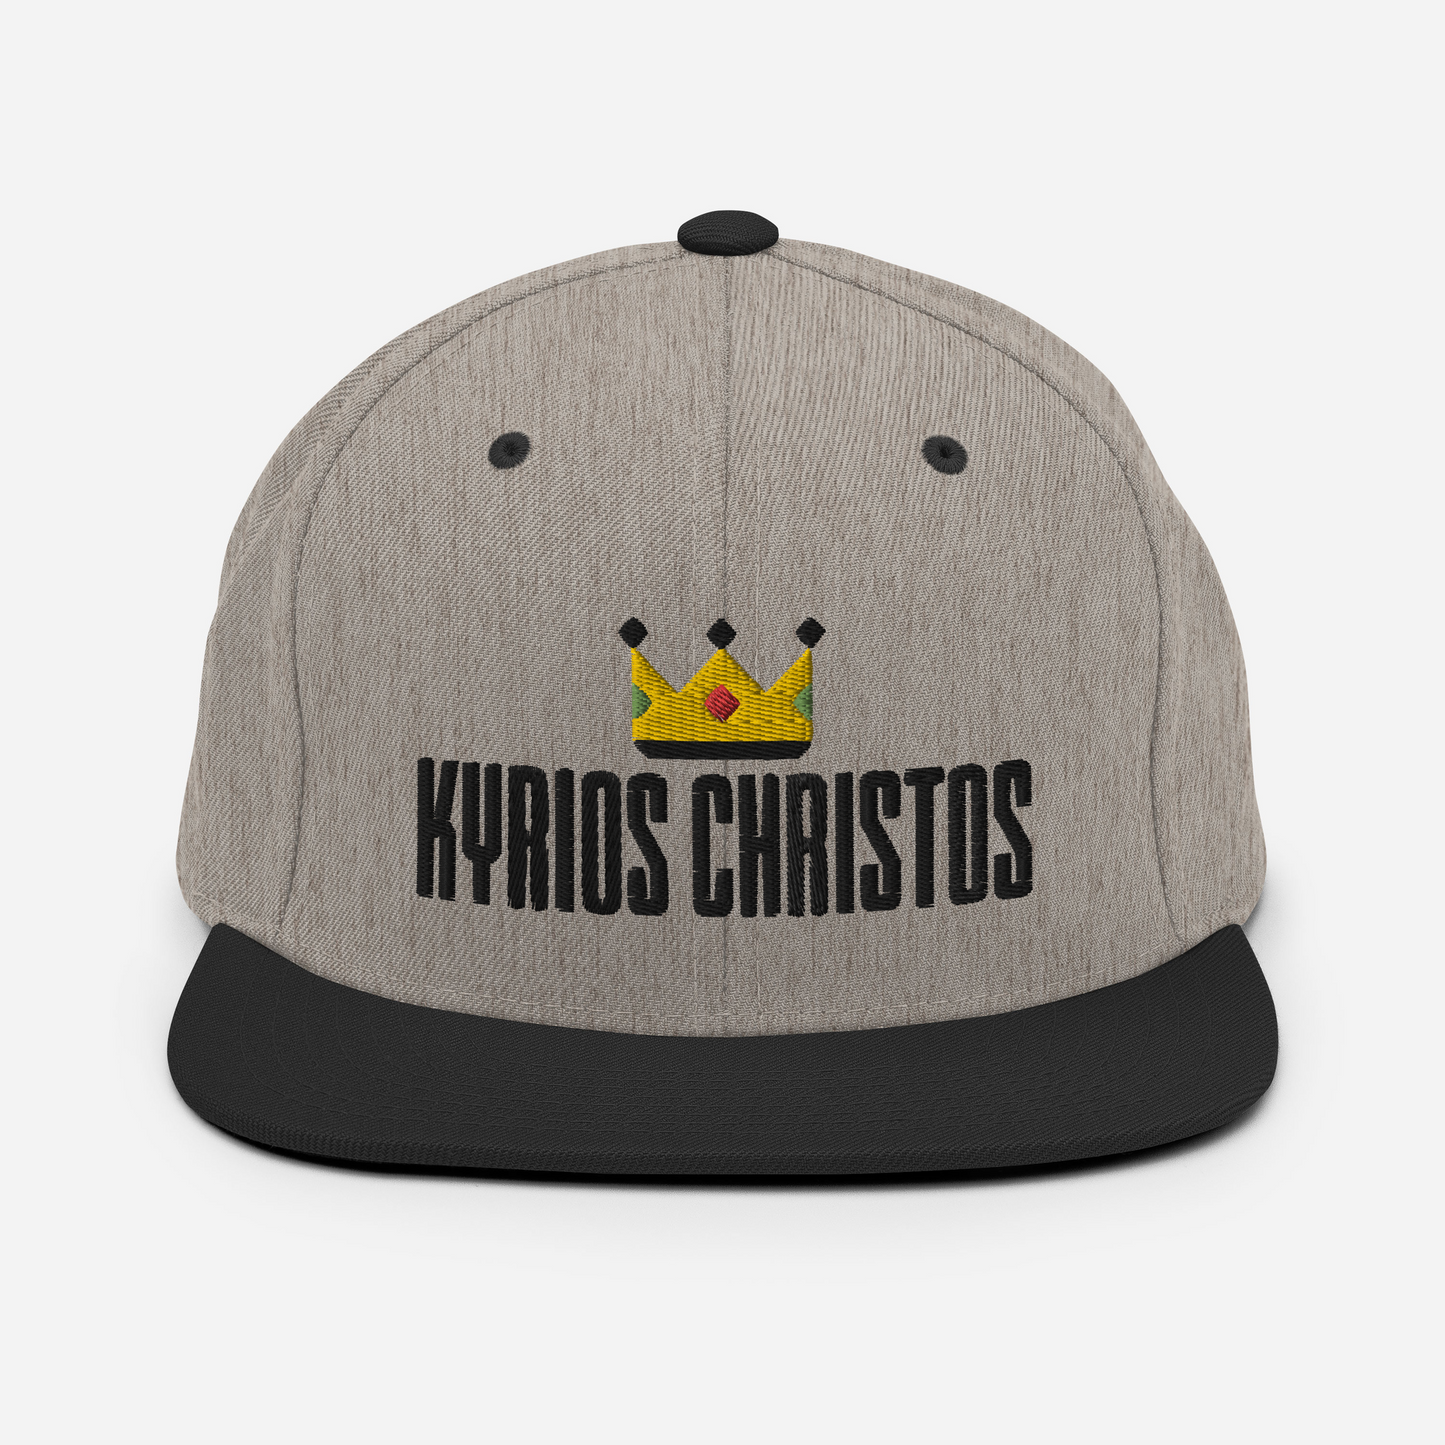 Kyrios Christos Snapback Hat